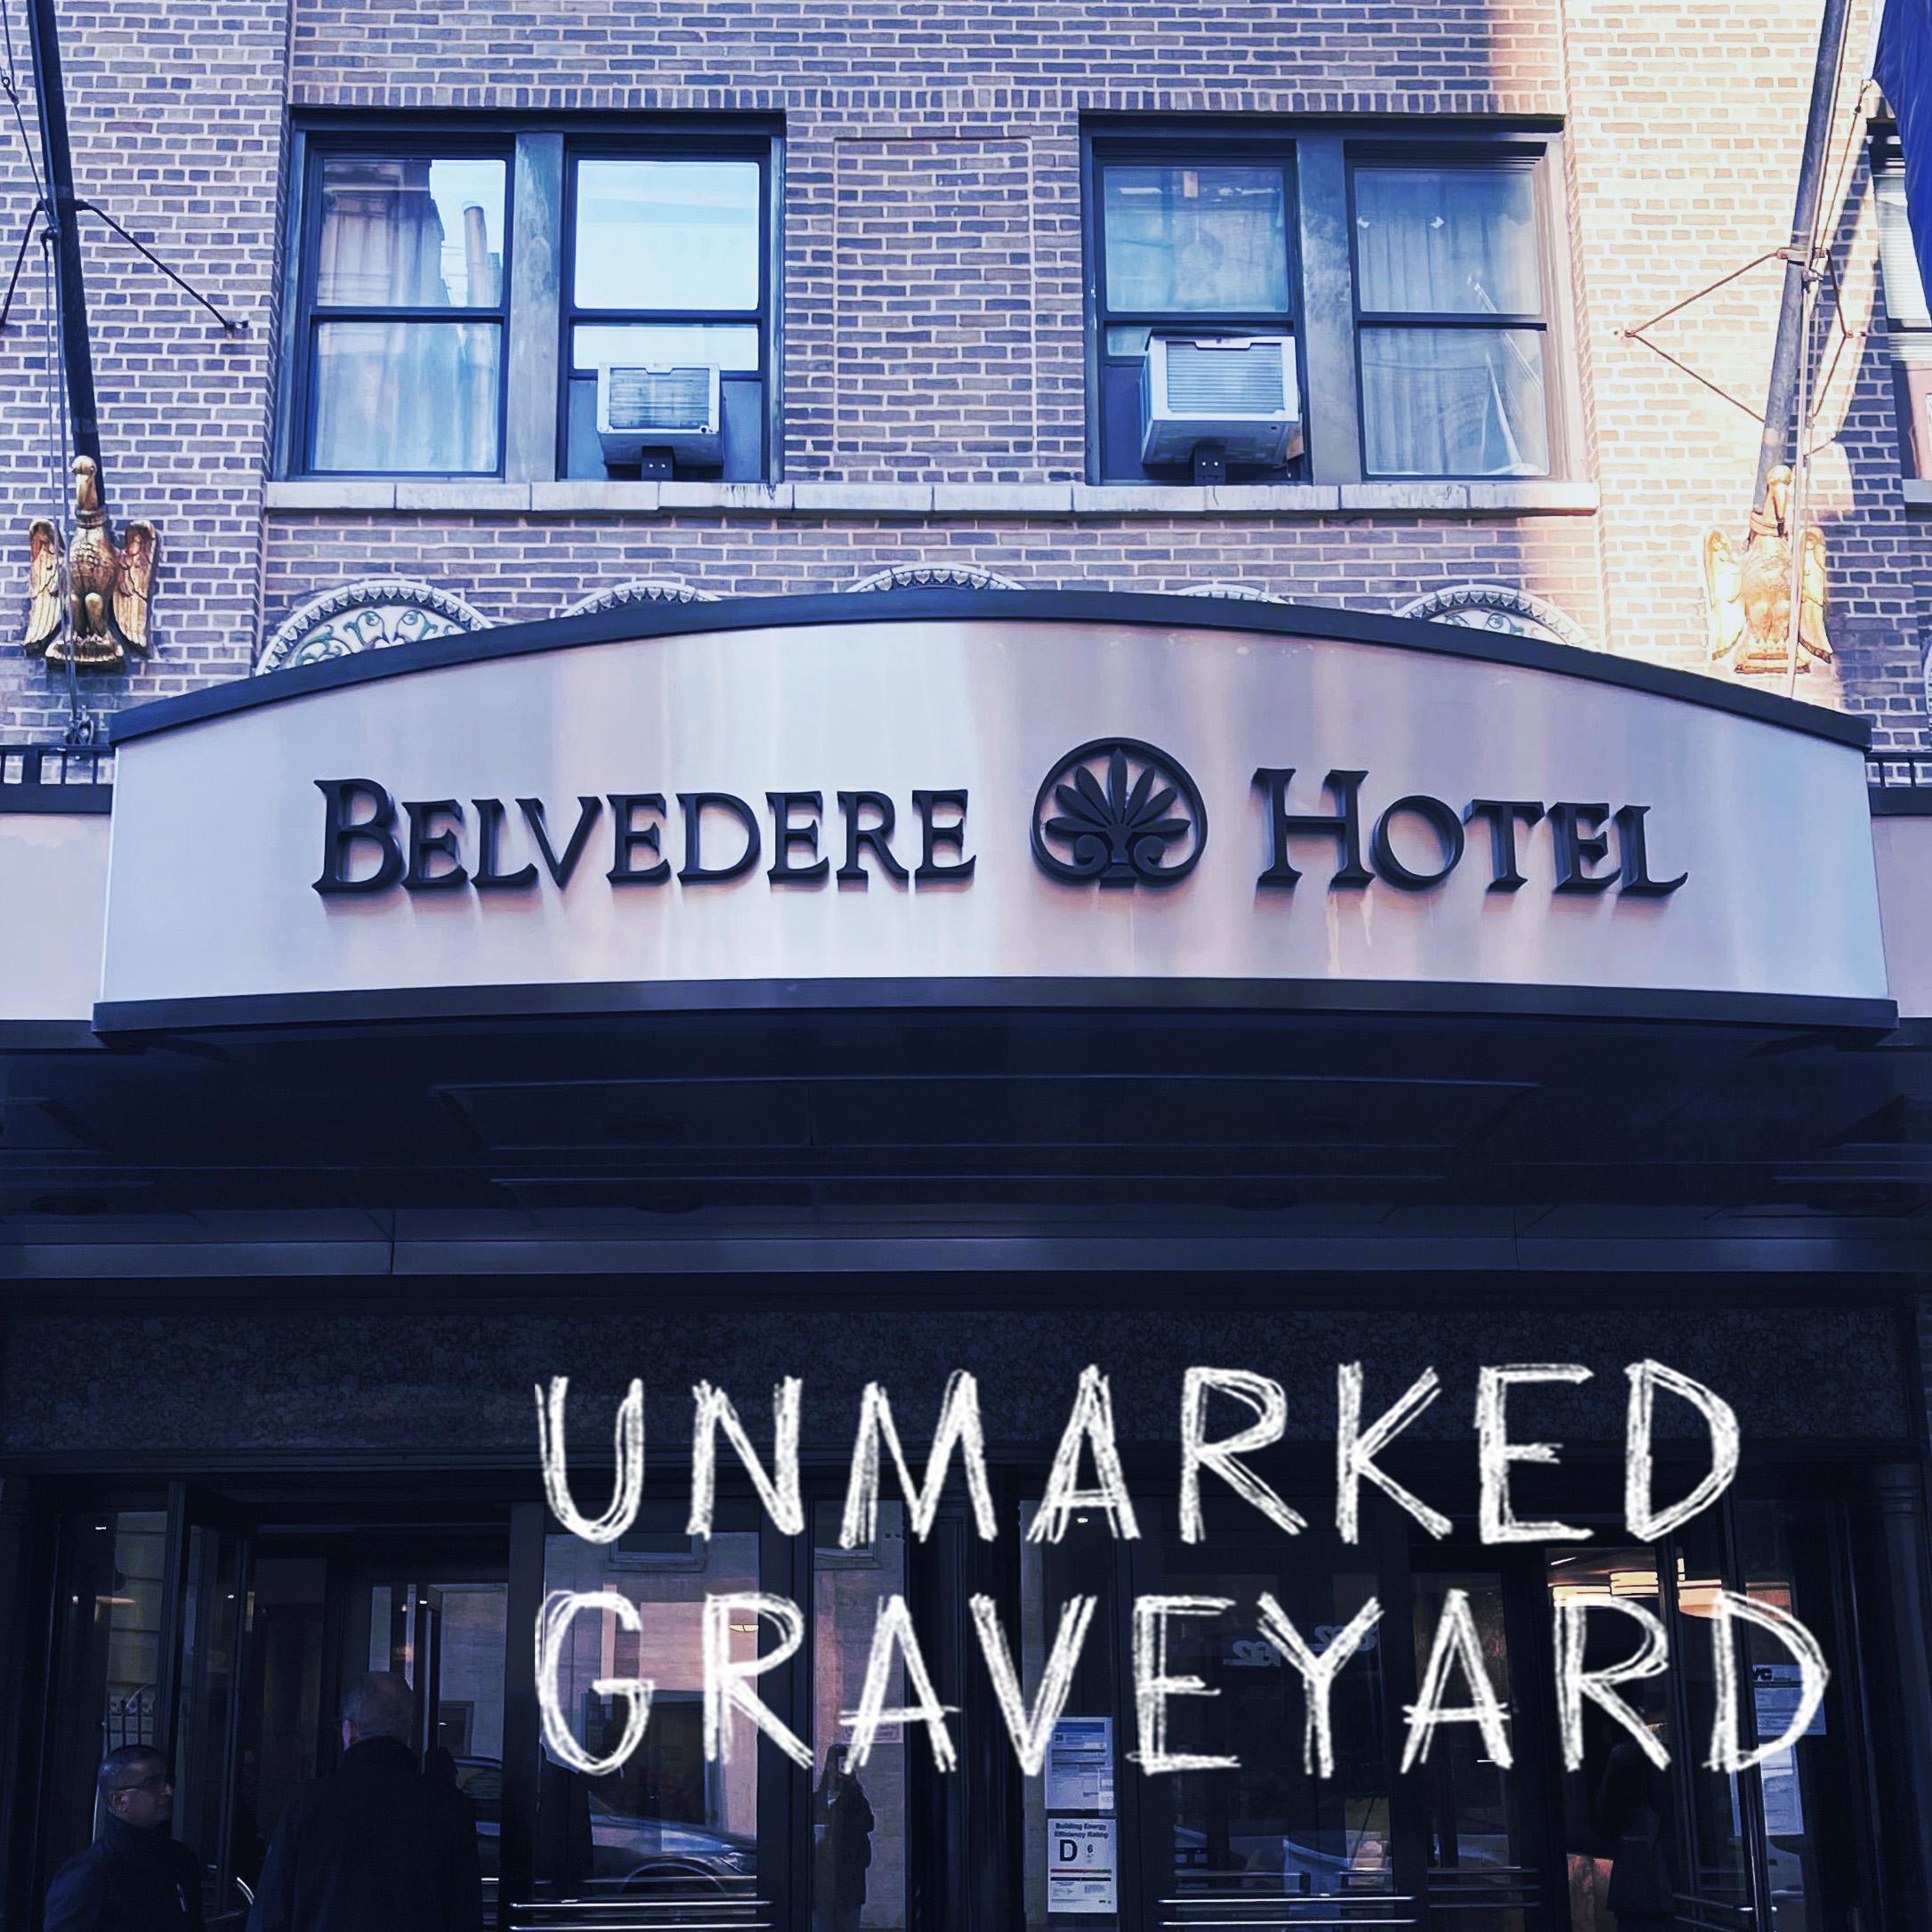 Thumbnail for "The Unmarked Graveyard: Hisako Hasegawa".